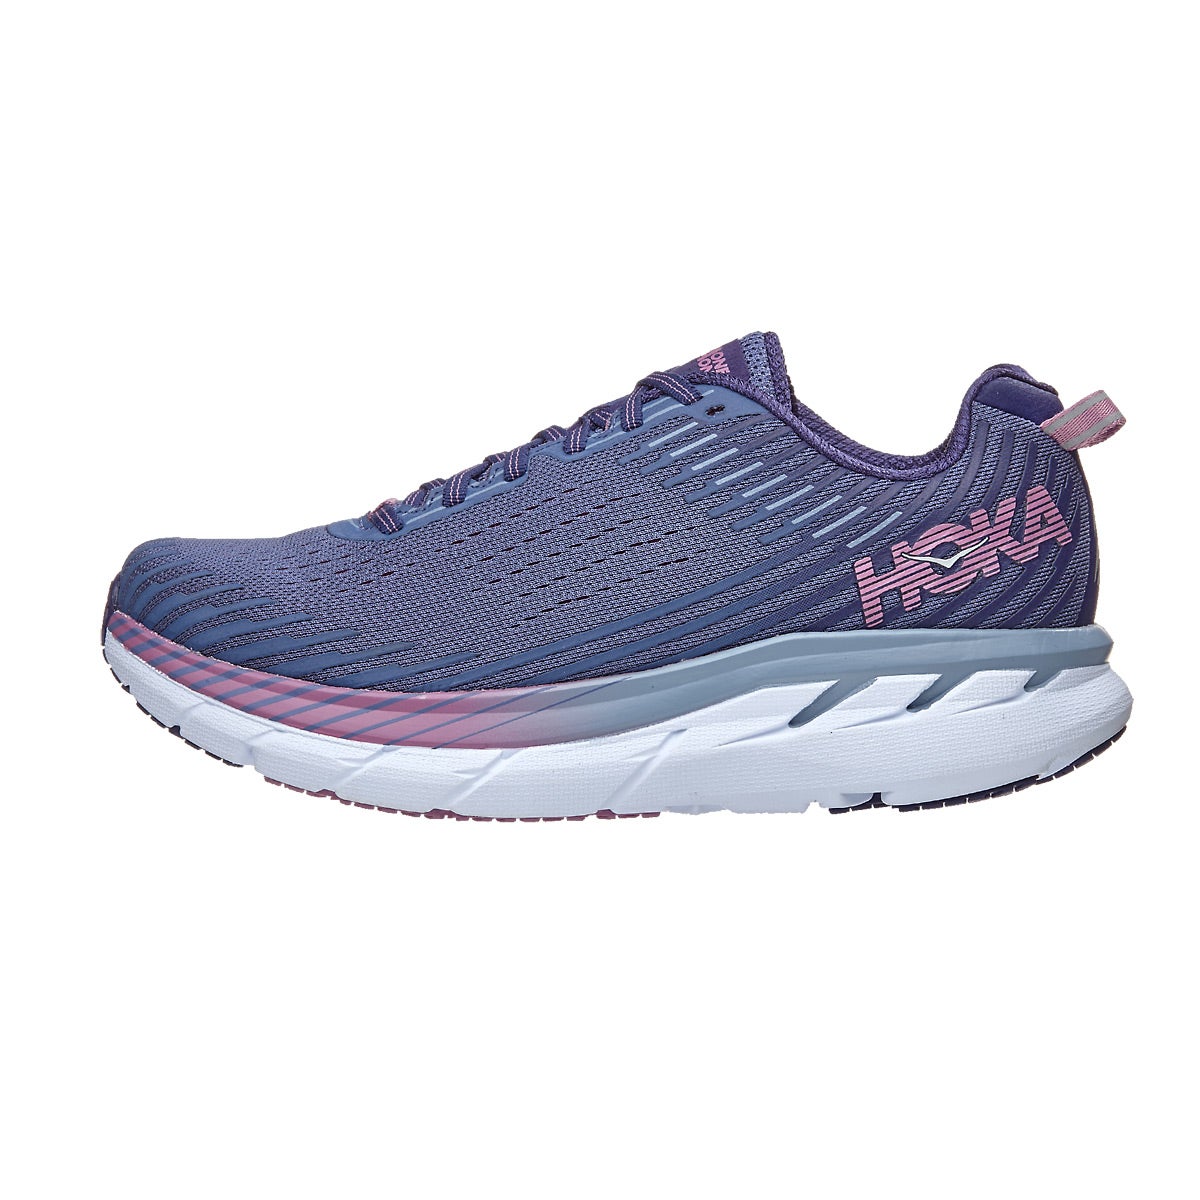 HOKA ONE ONE Clifton 5 Women's Shoes Marlin/Blue 360° View | Running ...